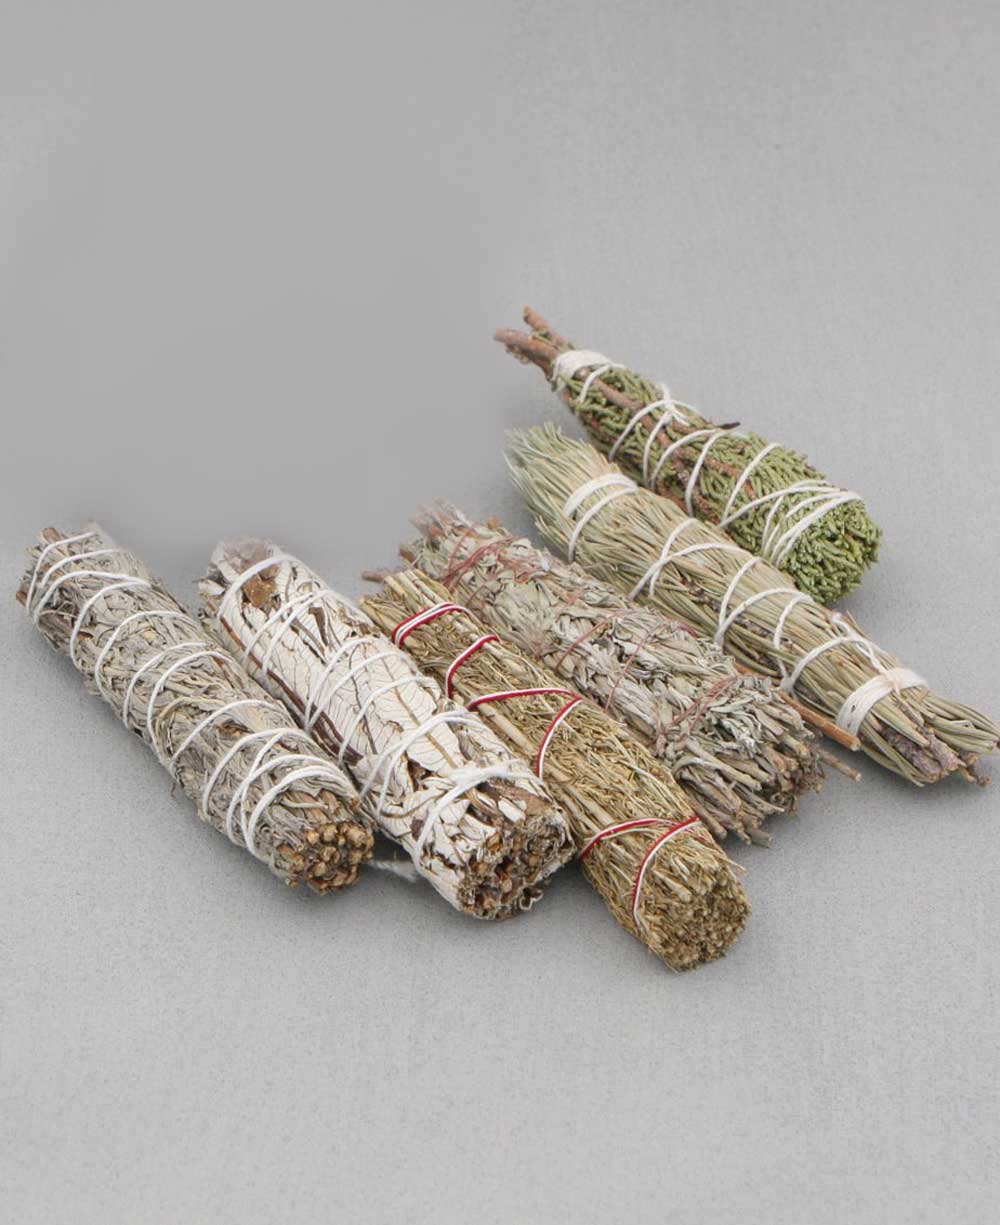 Smudge Stick Variety Kit, Set of 6 Sacred Herbs - Incense